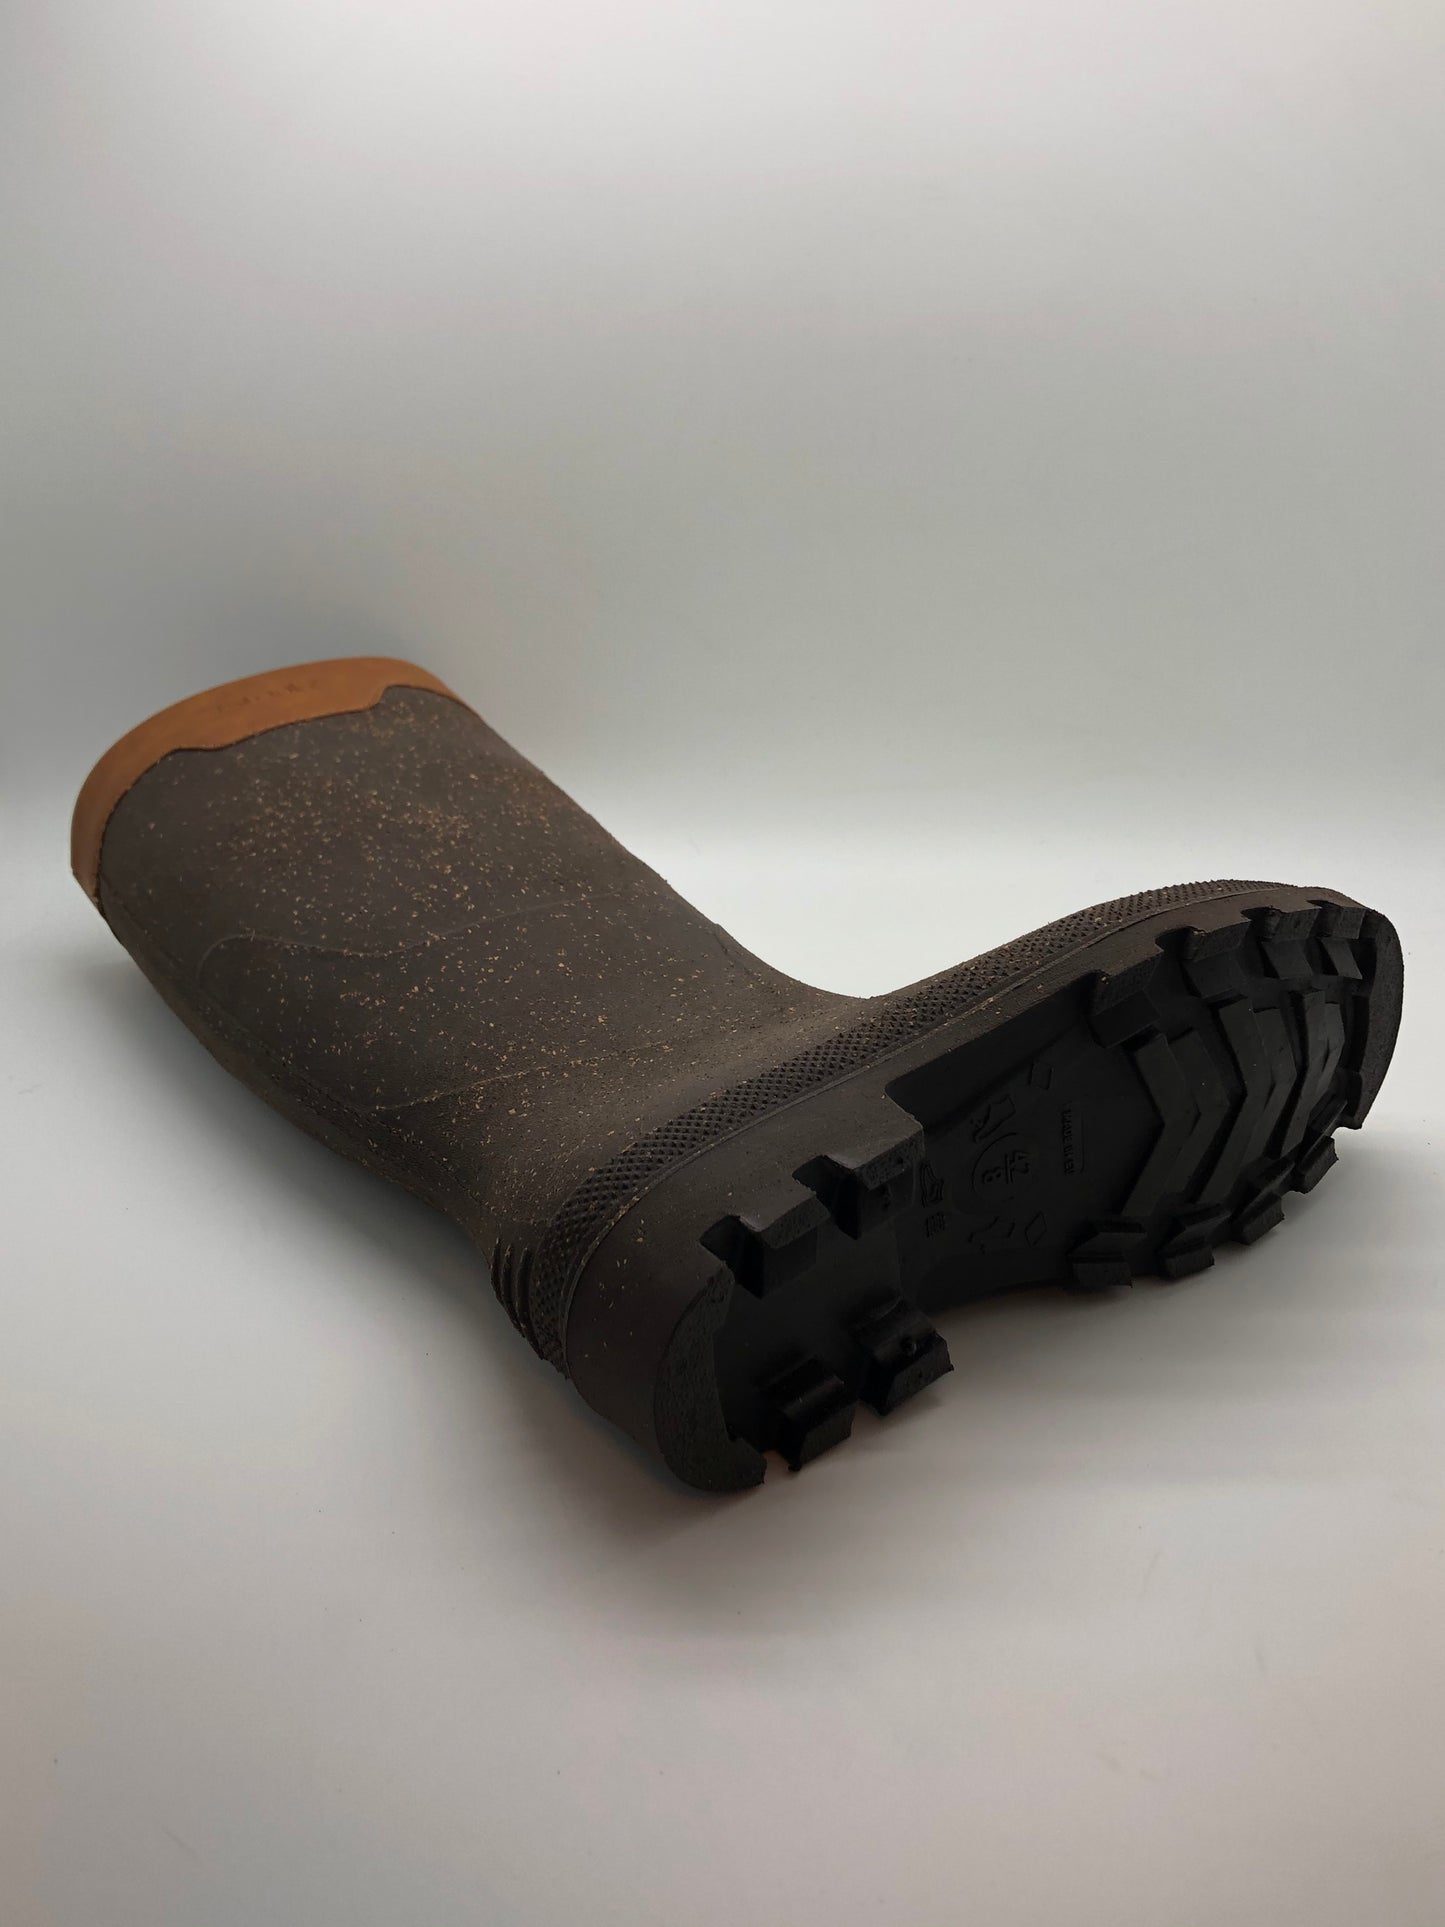 nat-2™ Rugged Prime Bully vegan cork (M) | 100% waterproof rainboots